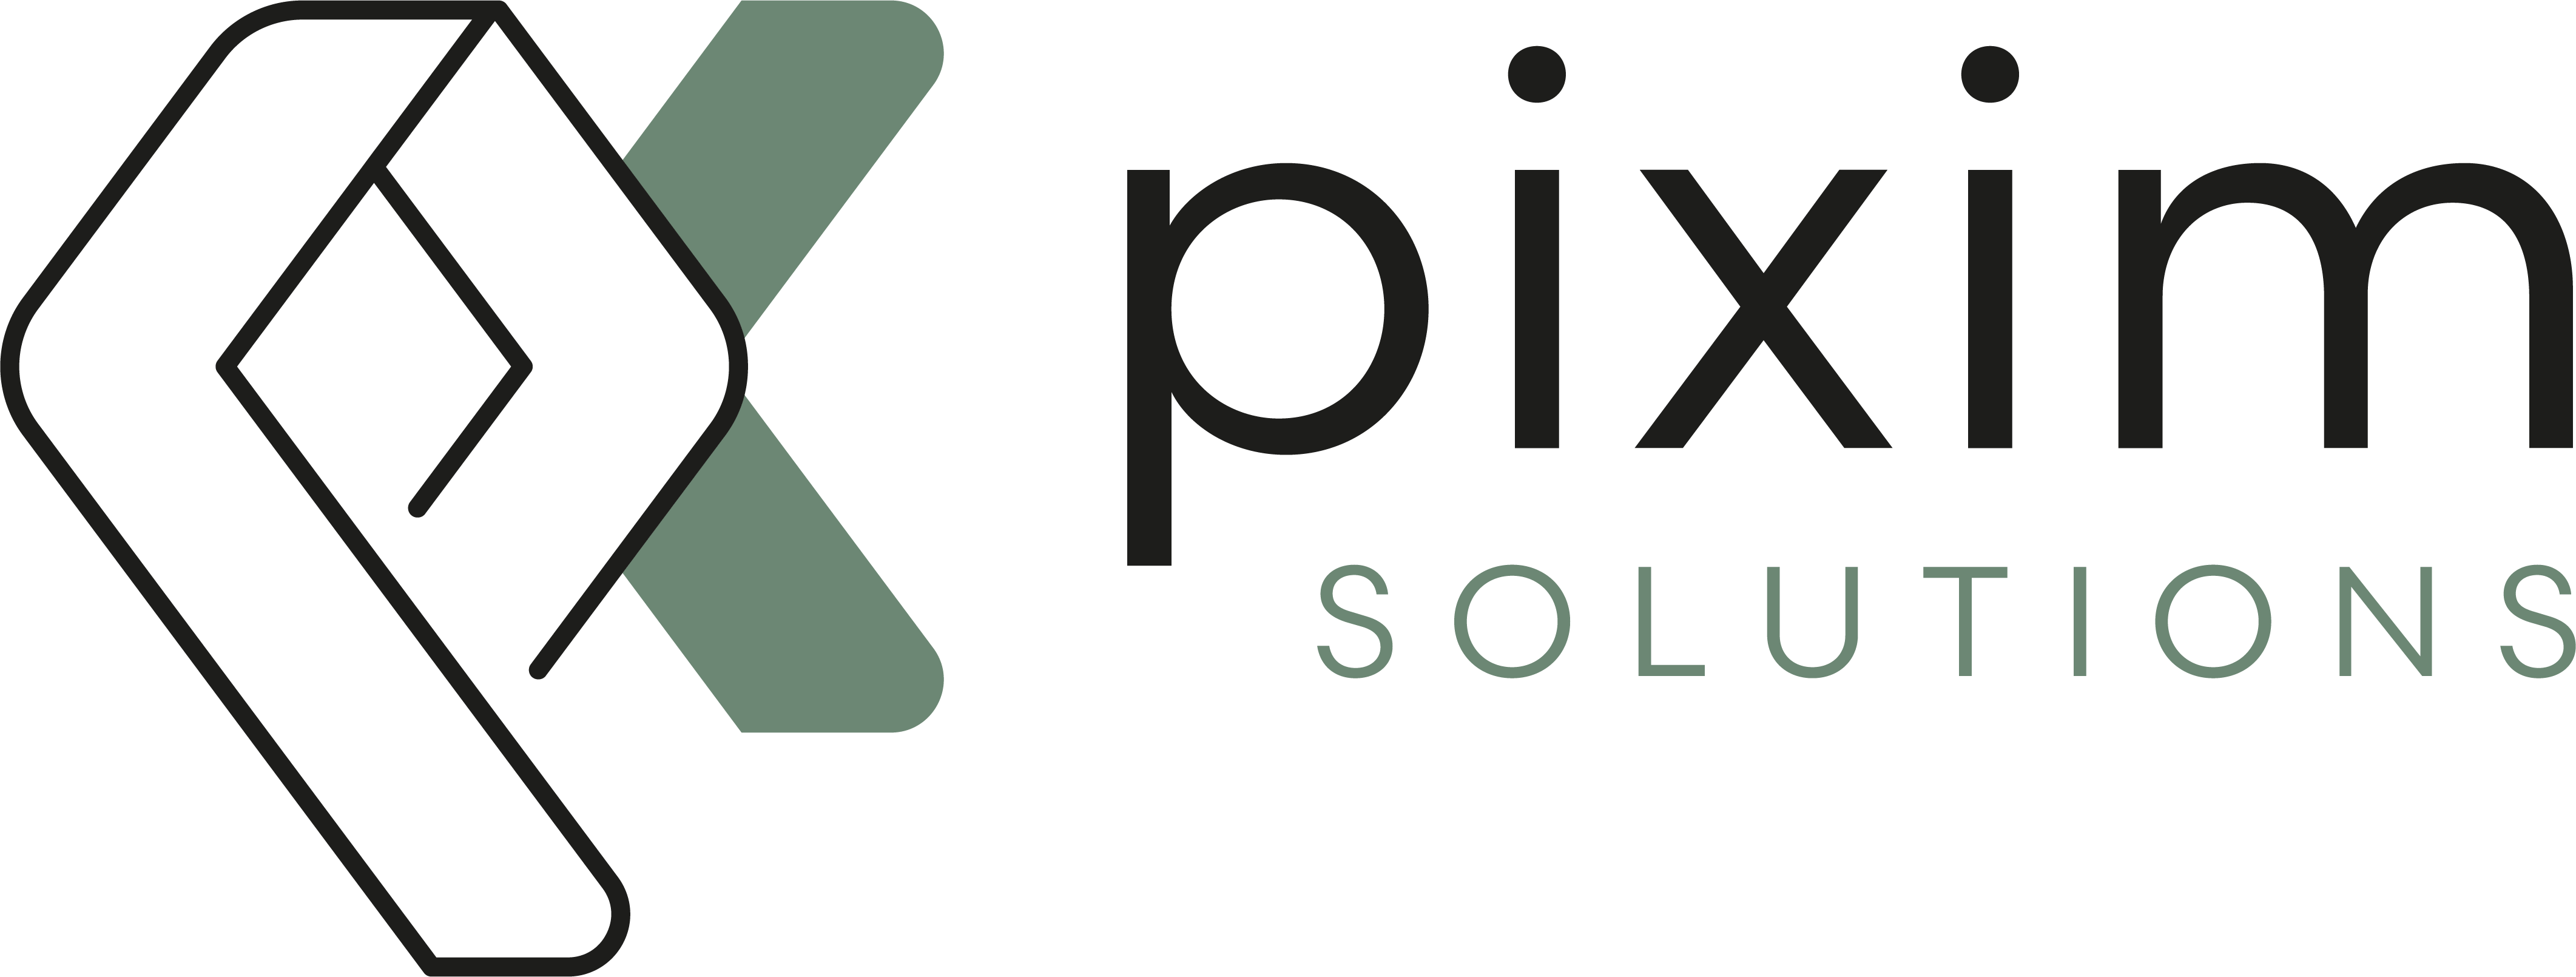 Pixim Solutions Logo